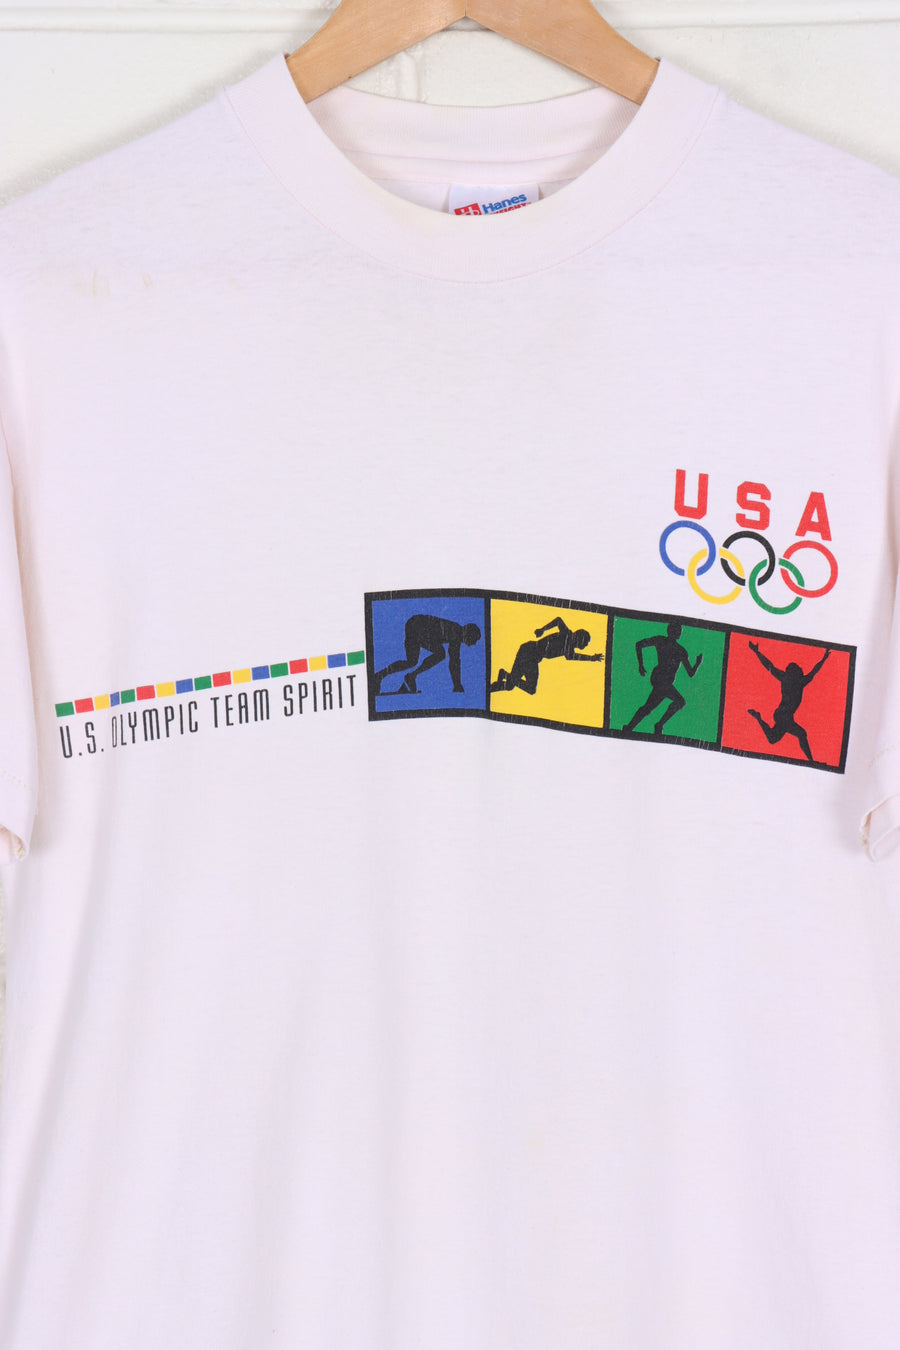 USA Olympics Team Sprint Colourful Single Stitch Tee (M)